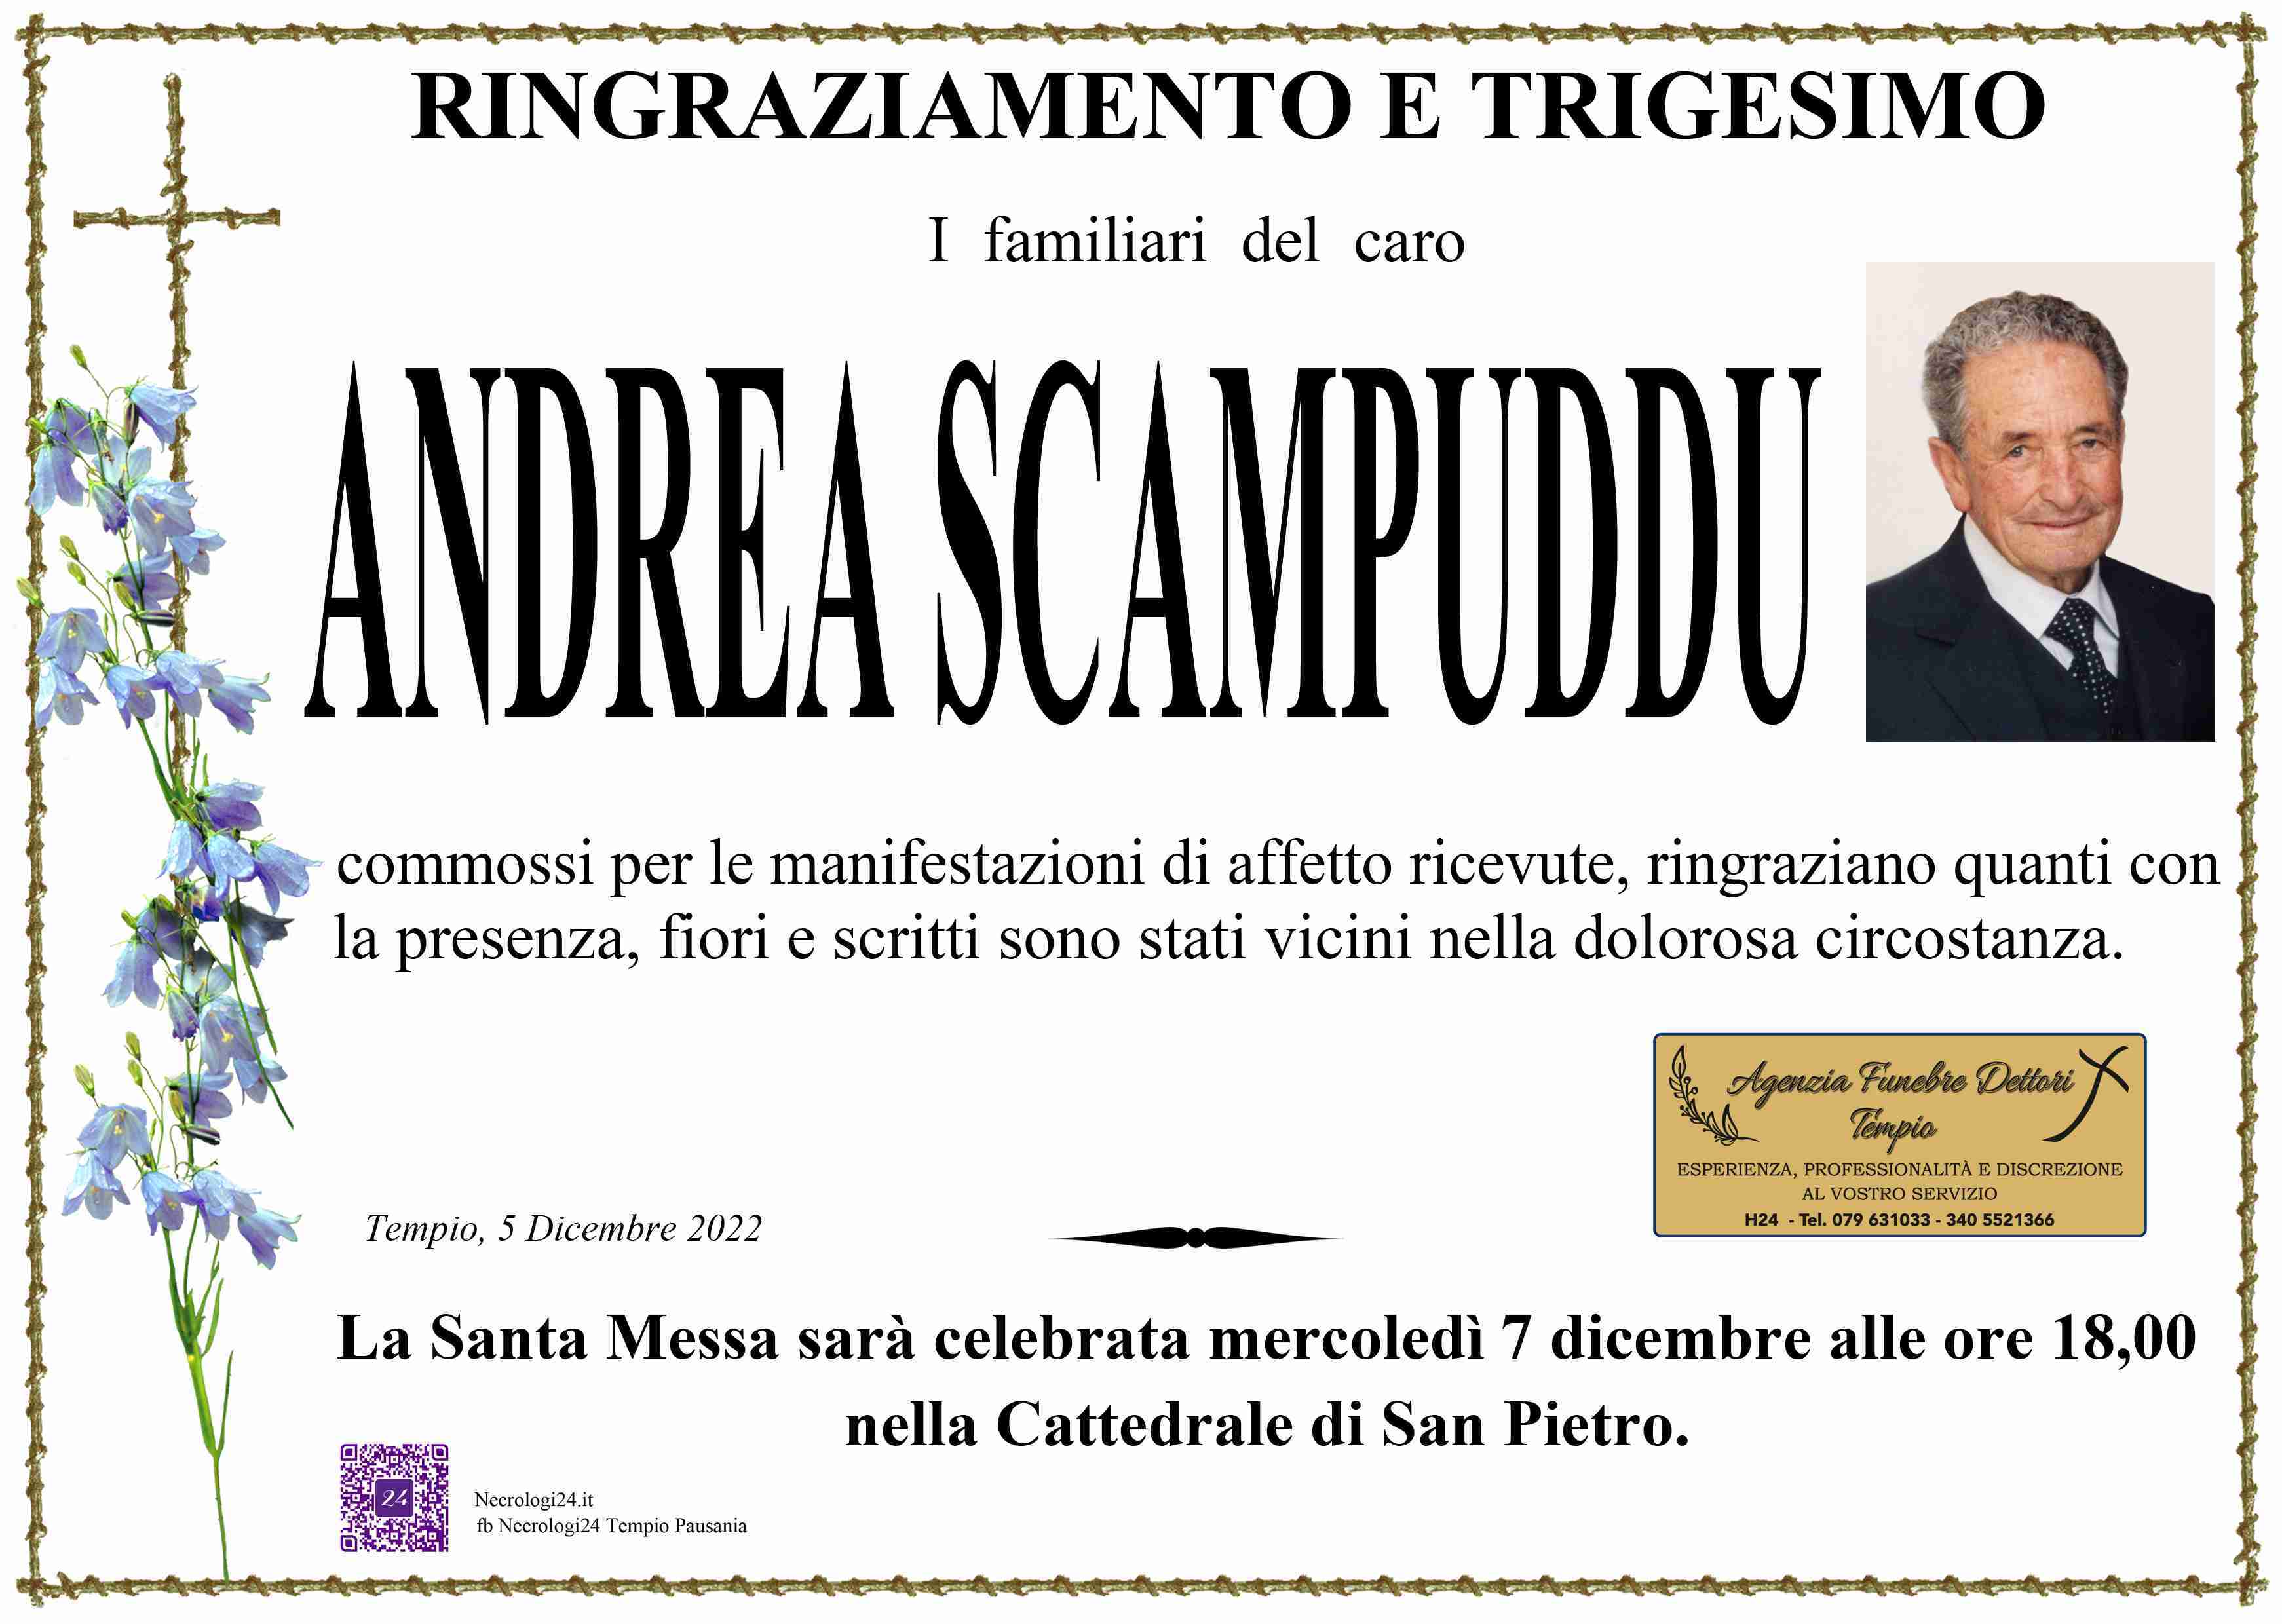 Andrea Scampuddu